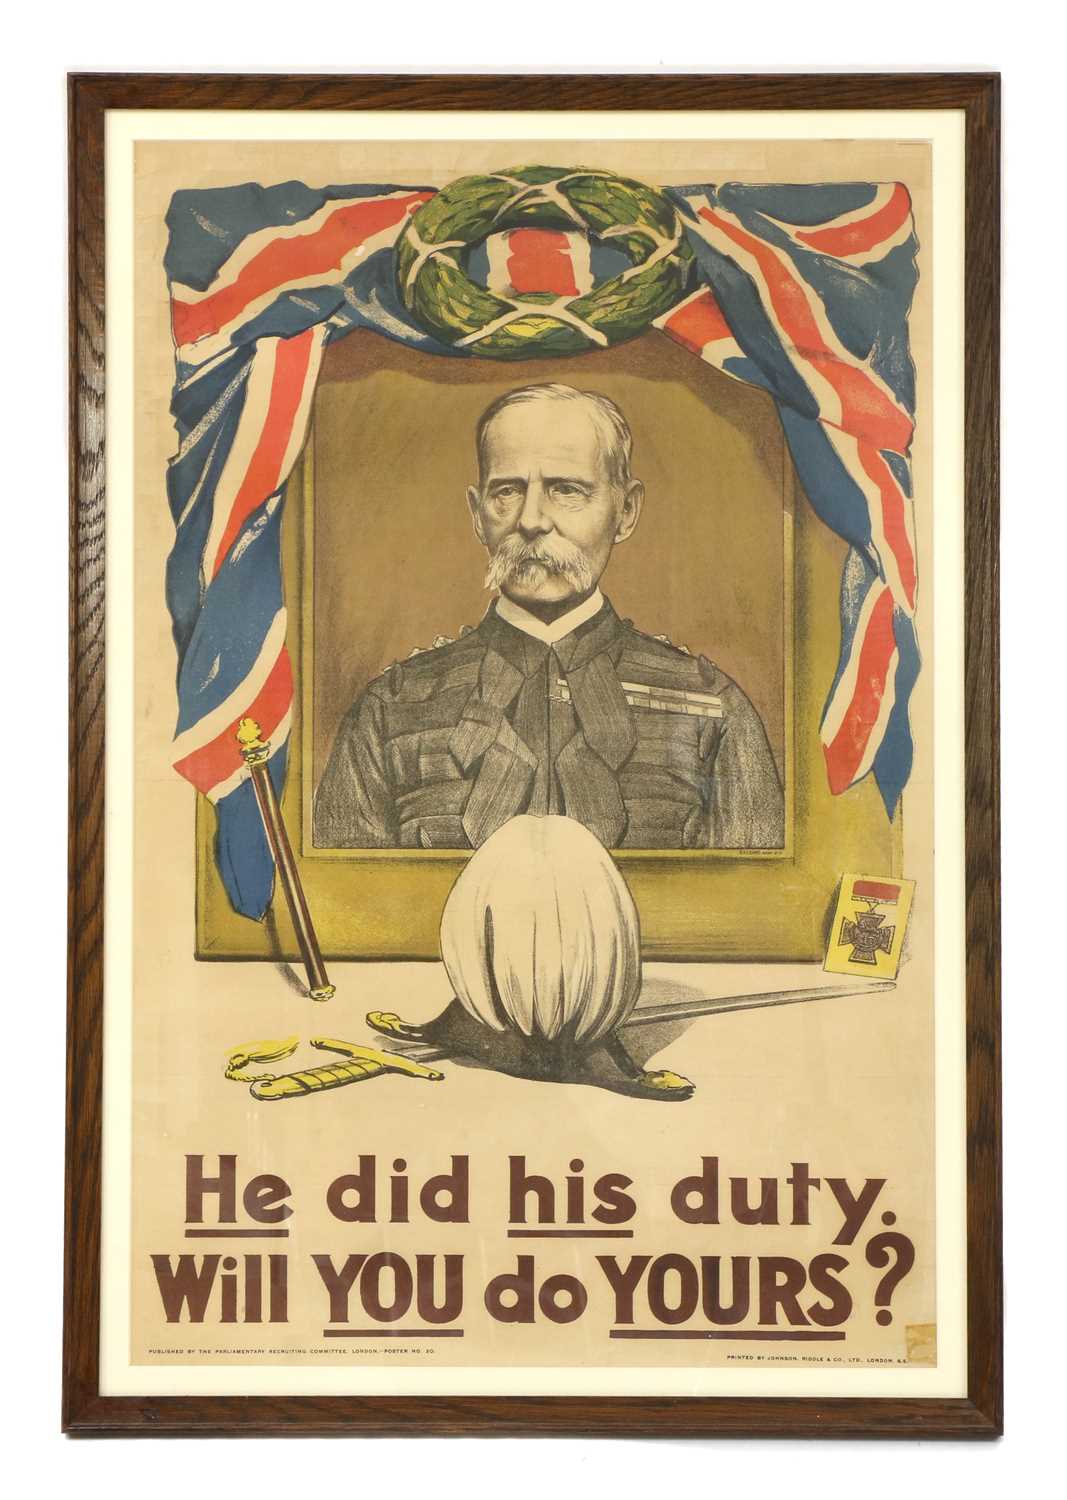 Lot 341 - A WWI recruitment or propaganda poster